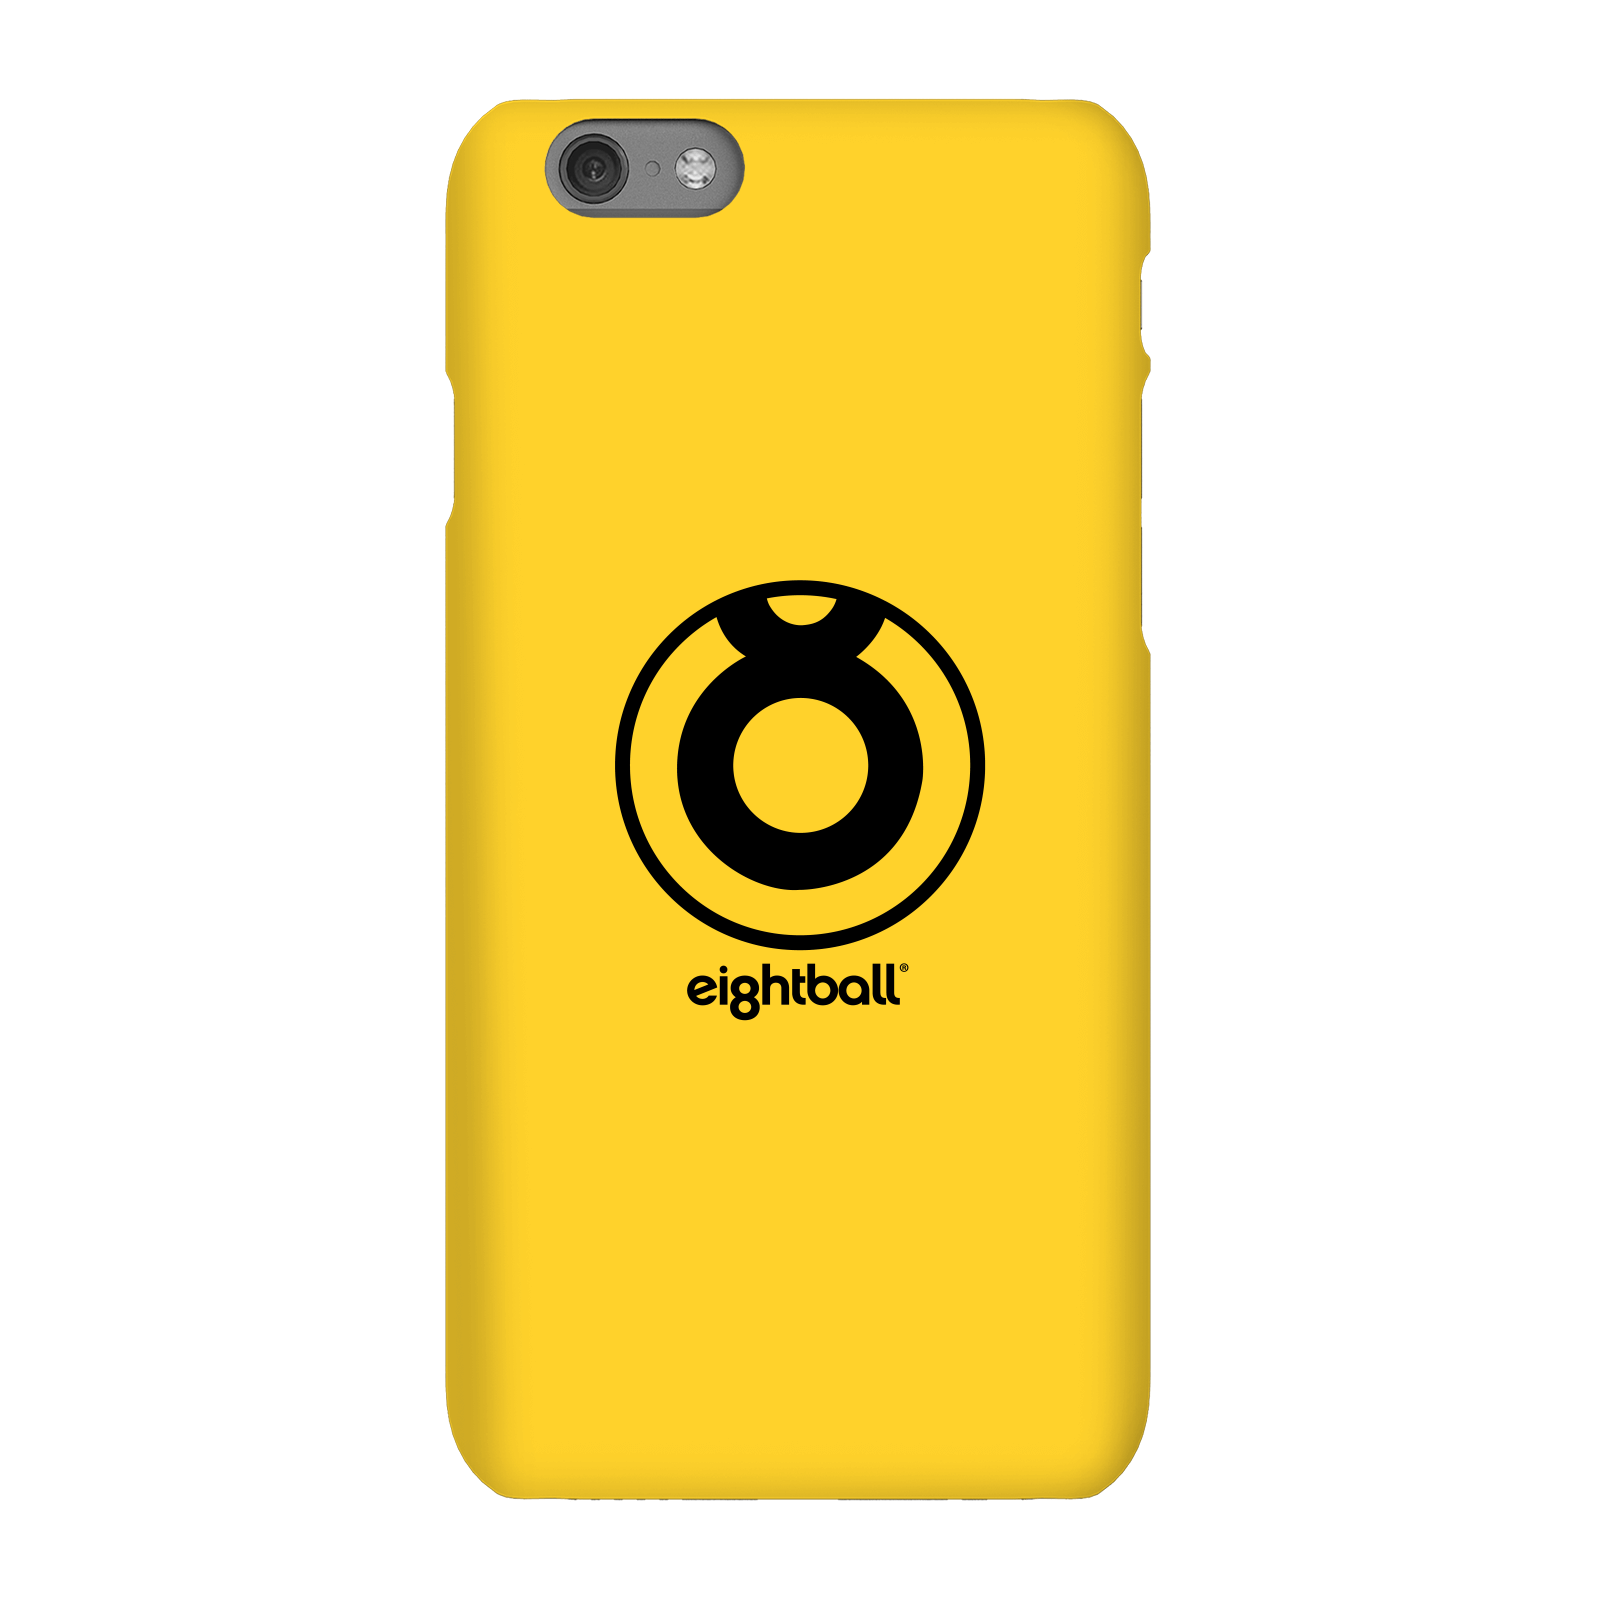 Funda Móvil Ei8htball Large Circle Logo para iPhone y Android - iPhone 6S - Carcasa rígida - Mate